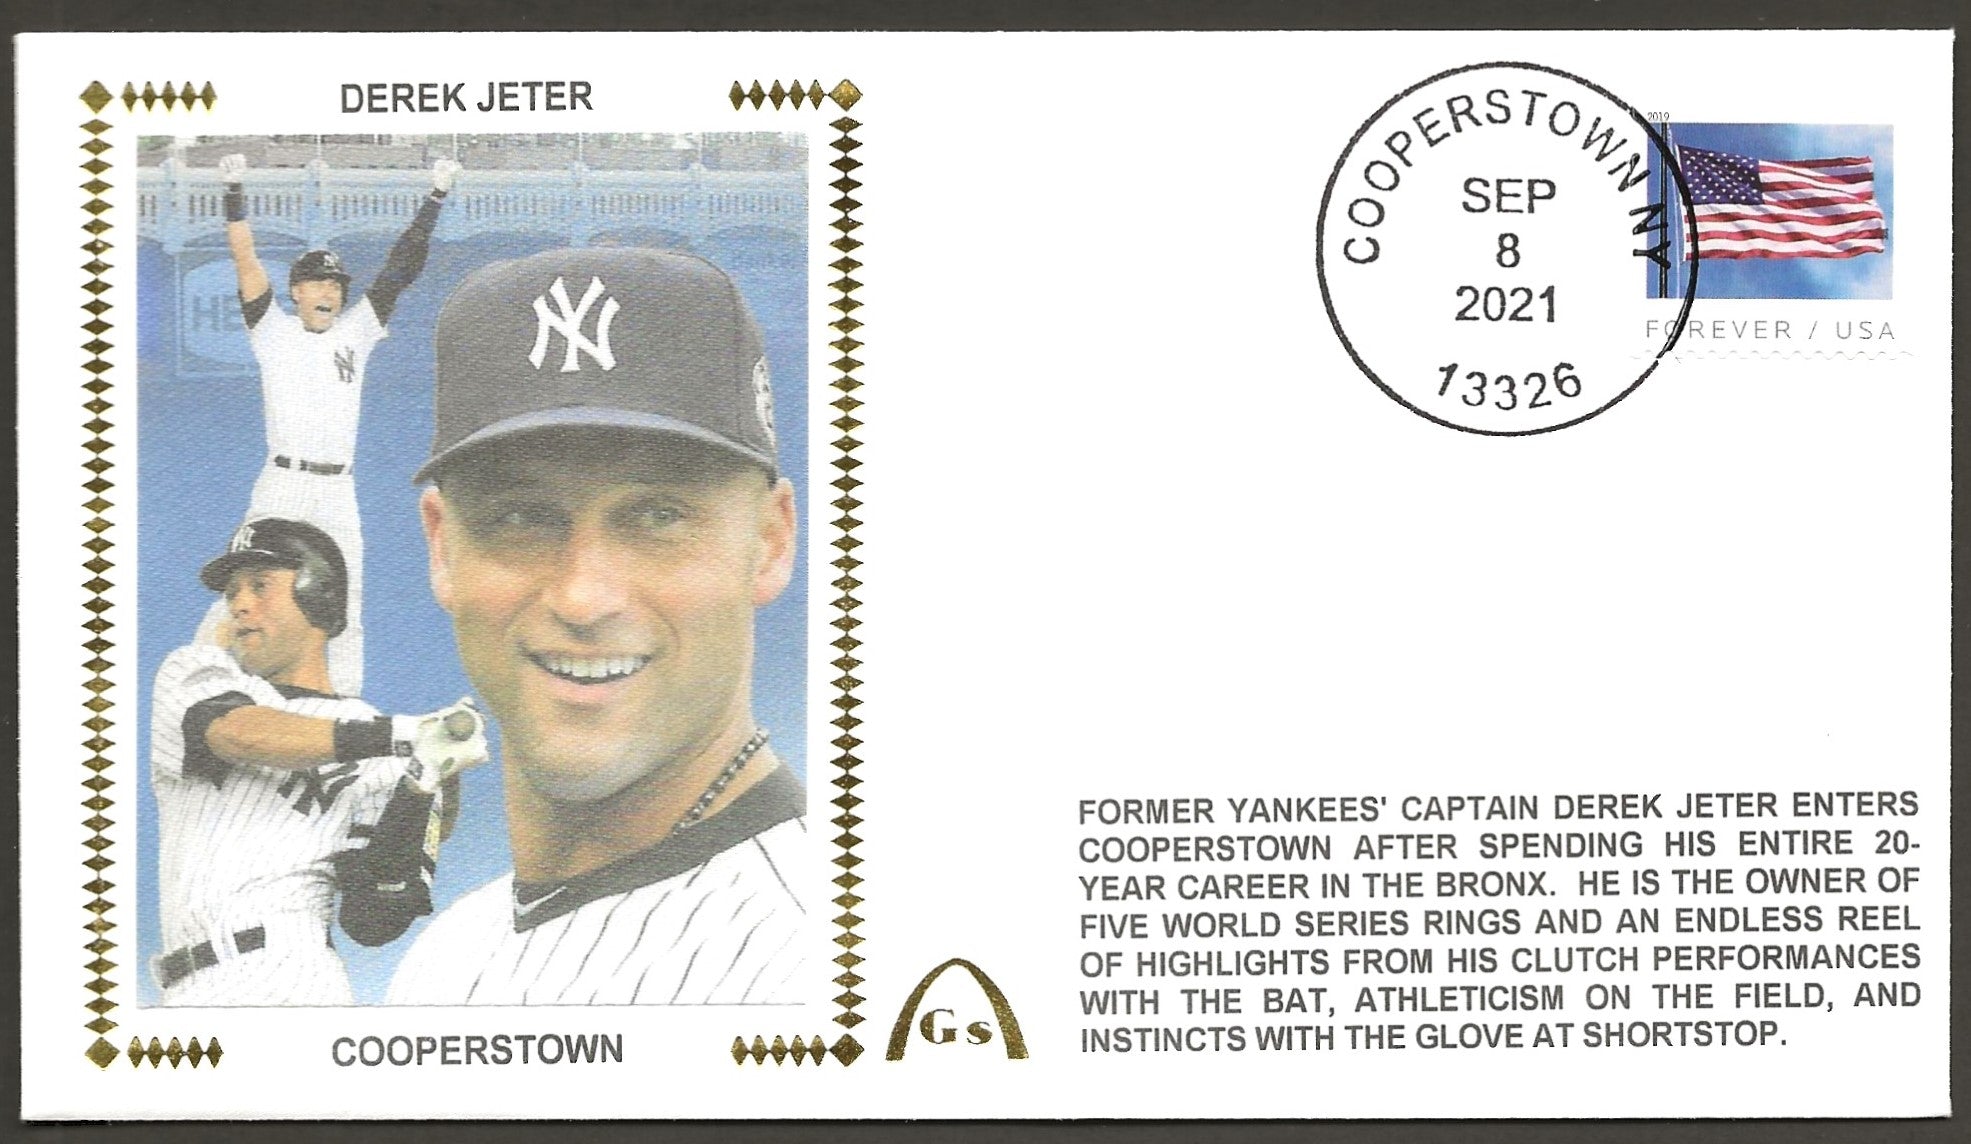 Derek Jeter Hall of Fame: New York Yankees career by the numbers